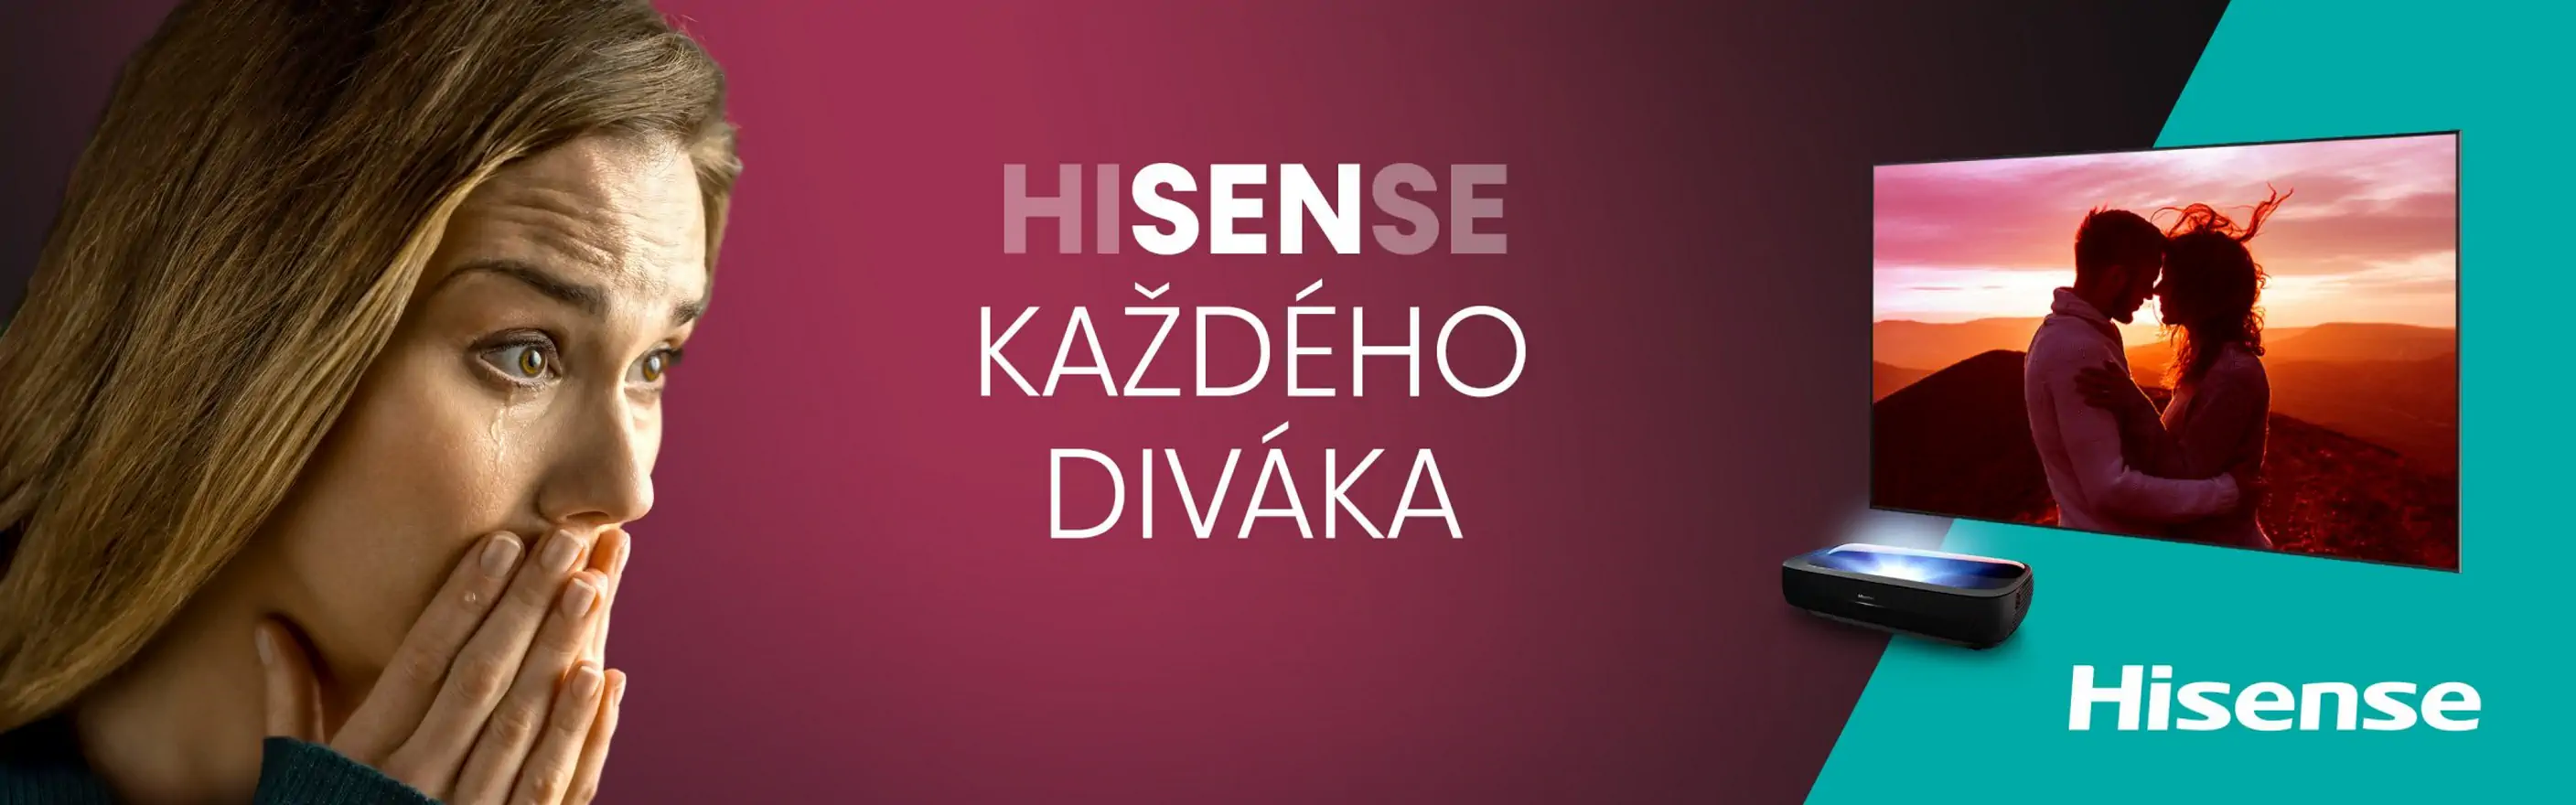 hisense-sen-kazdeho-divaka-lp-desktop-sk-1-scaled-2816x880.webp